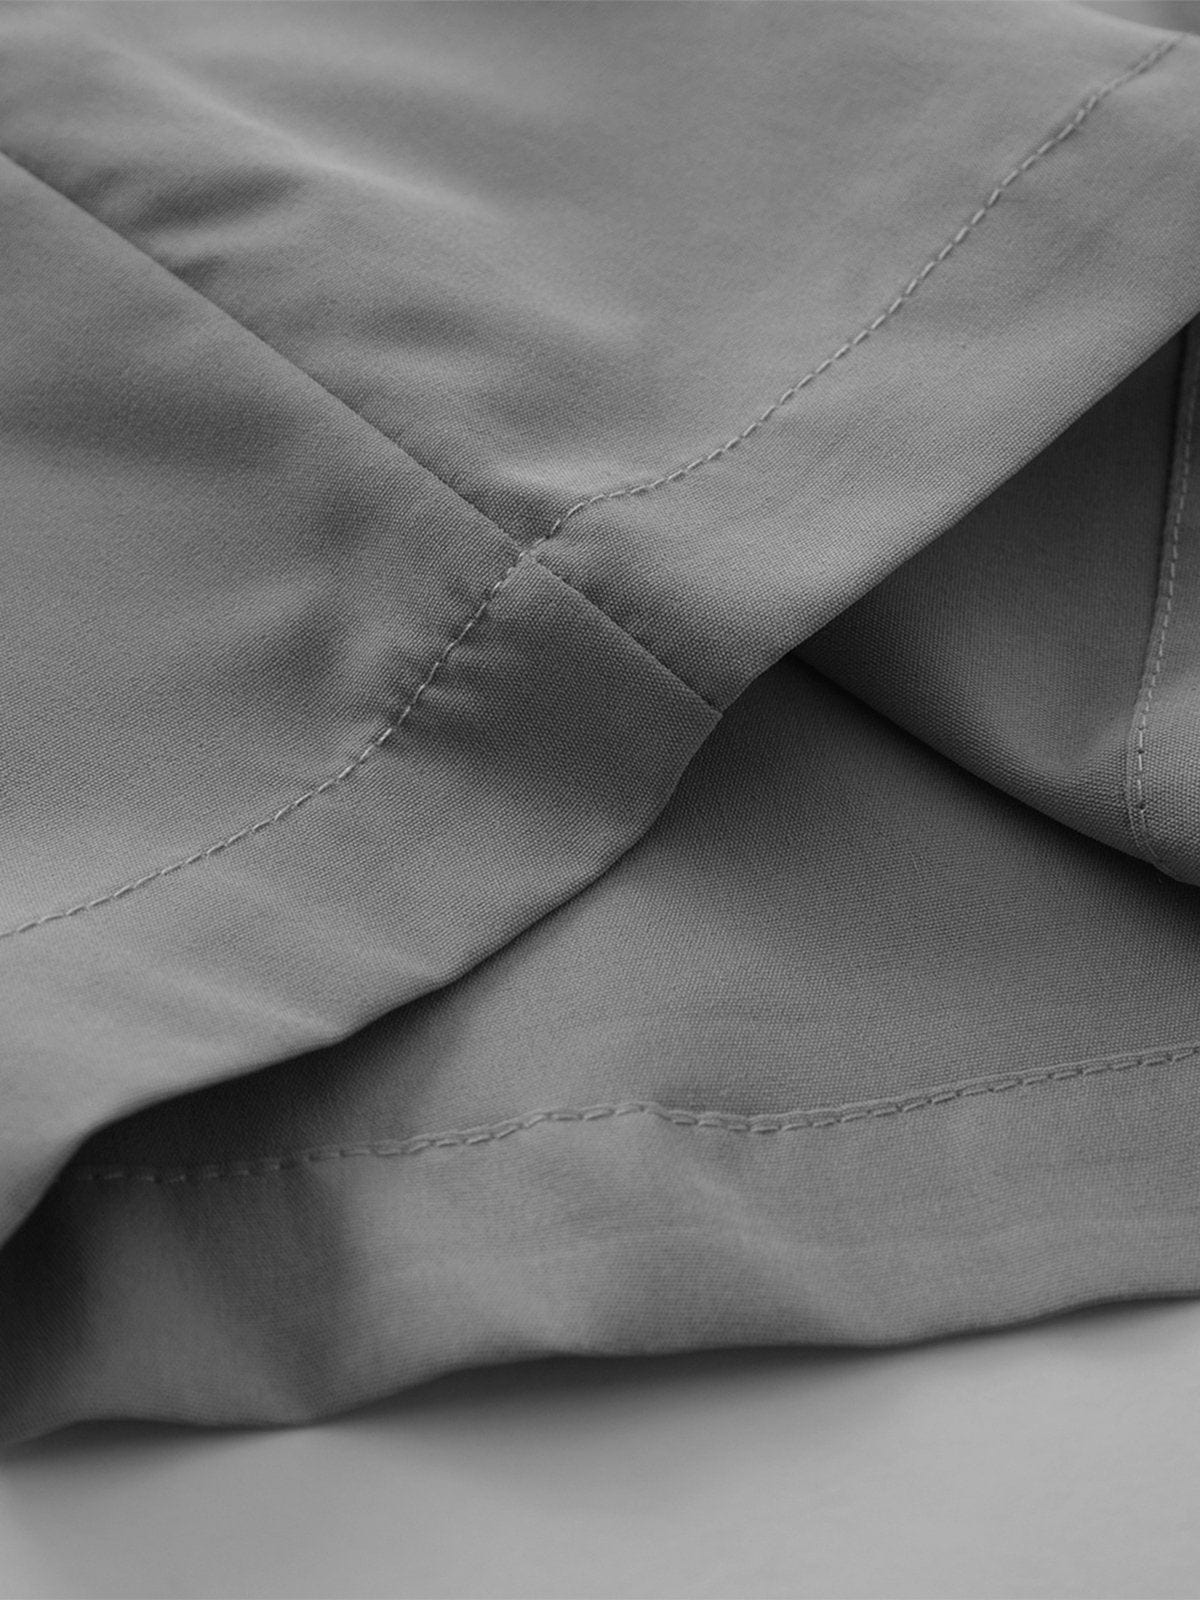 NEV Material Patchwork Buckled Short Sleeve Shirt